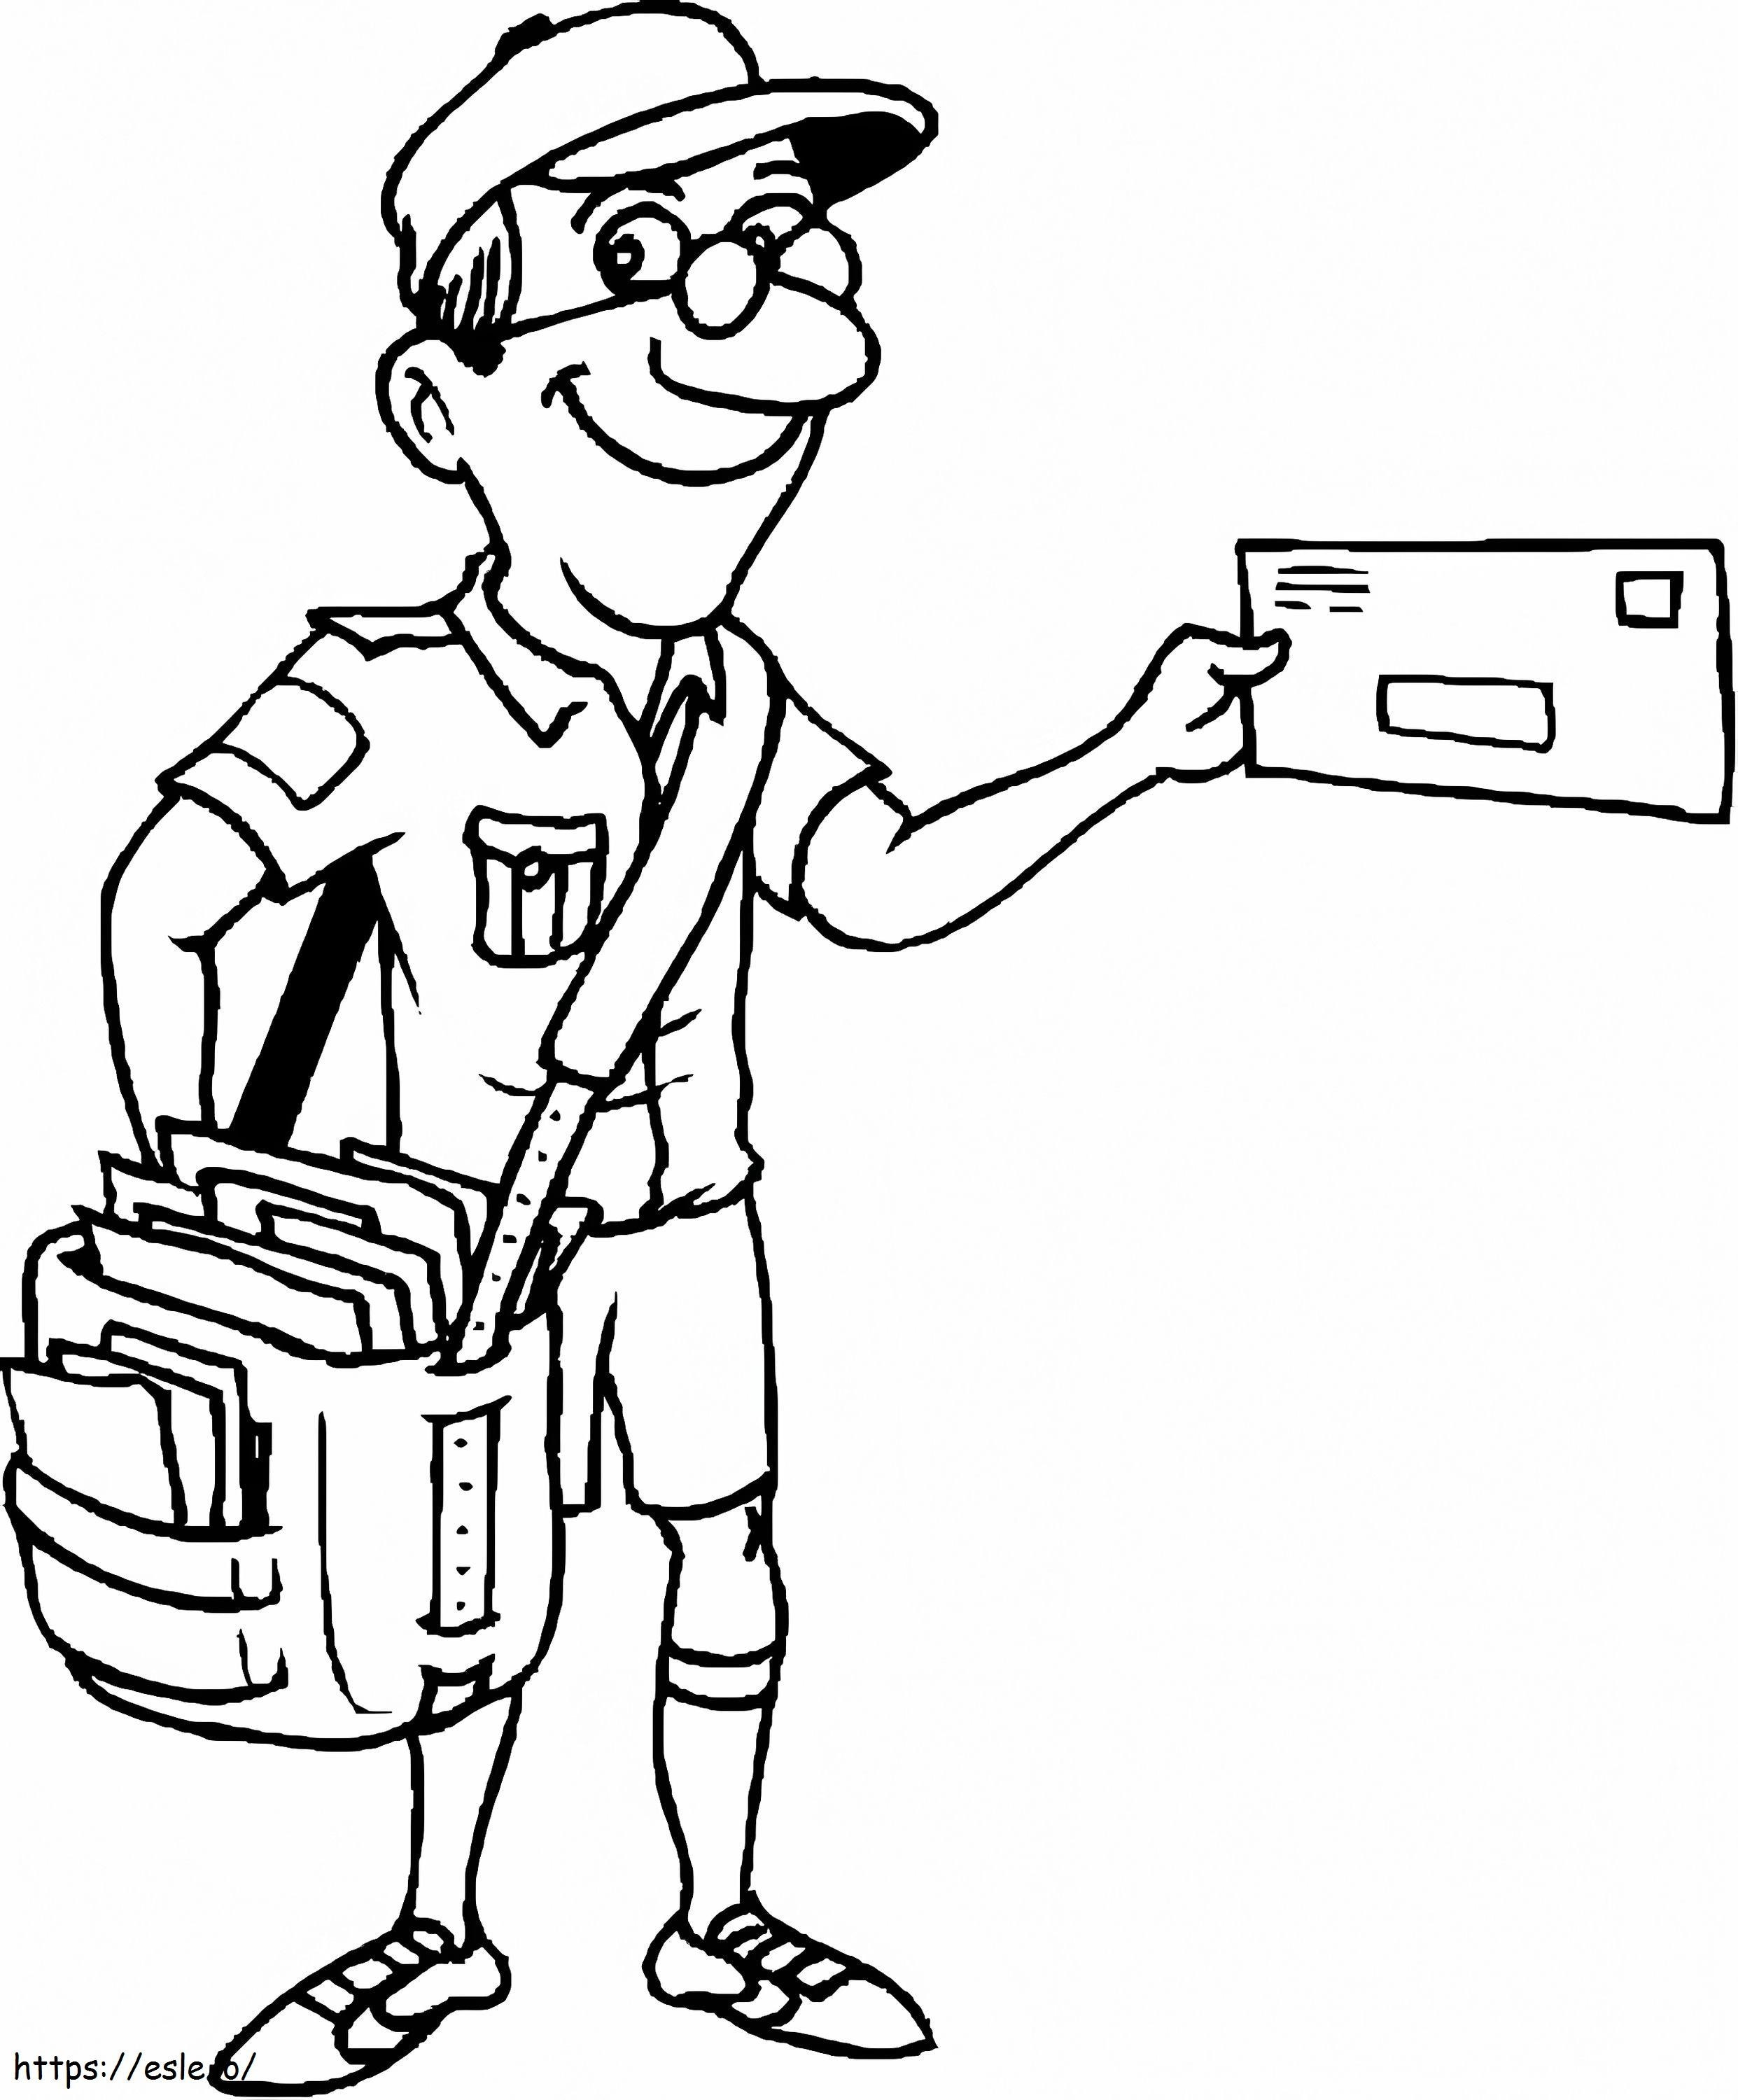 Smiling Postman coloring page